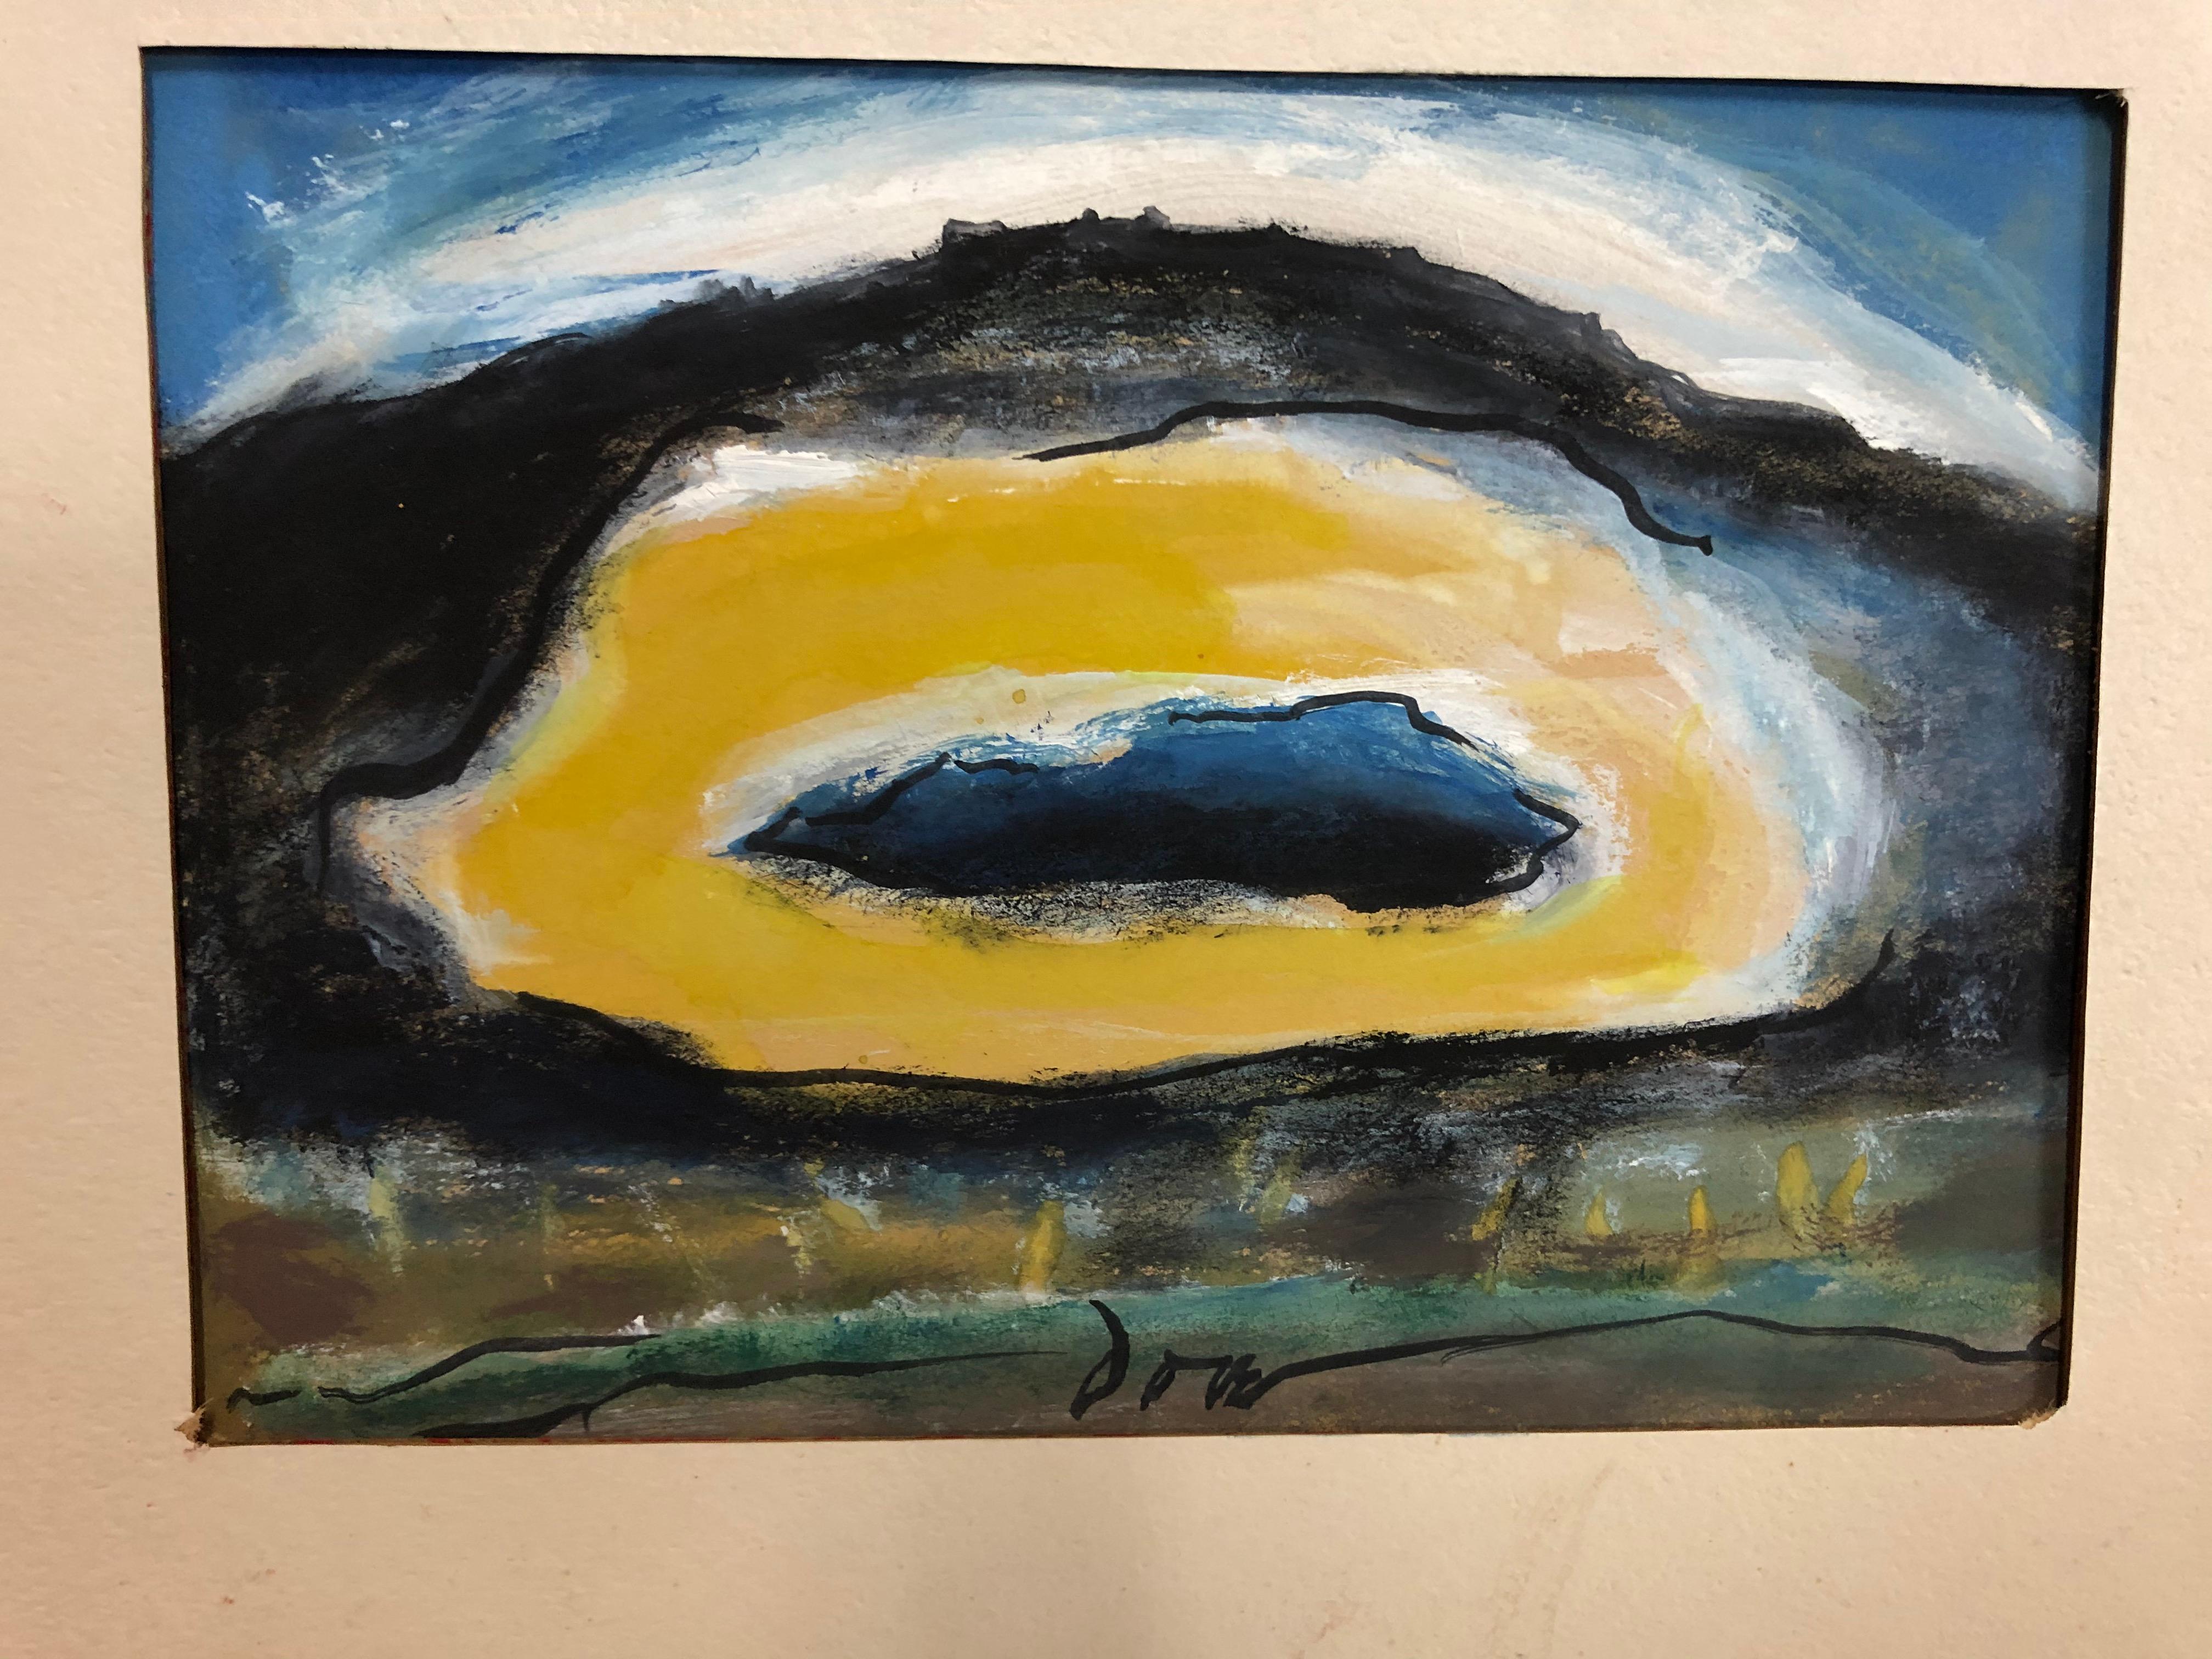 Arthur Dove 1940 "Sun" Painting